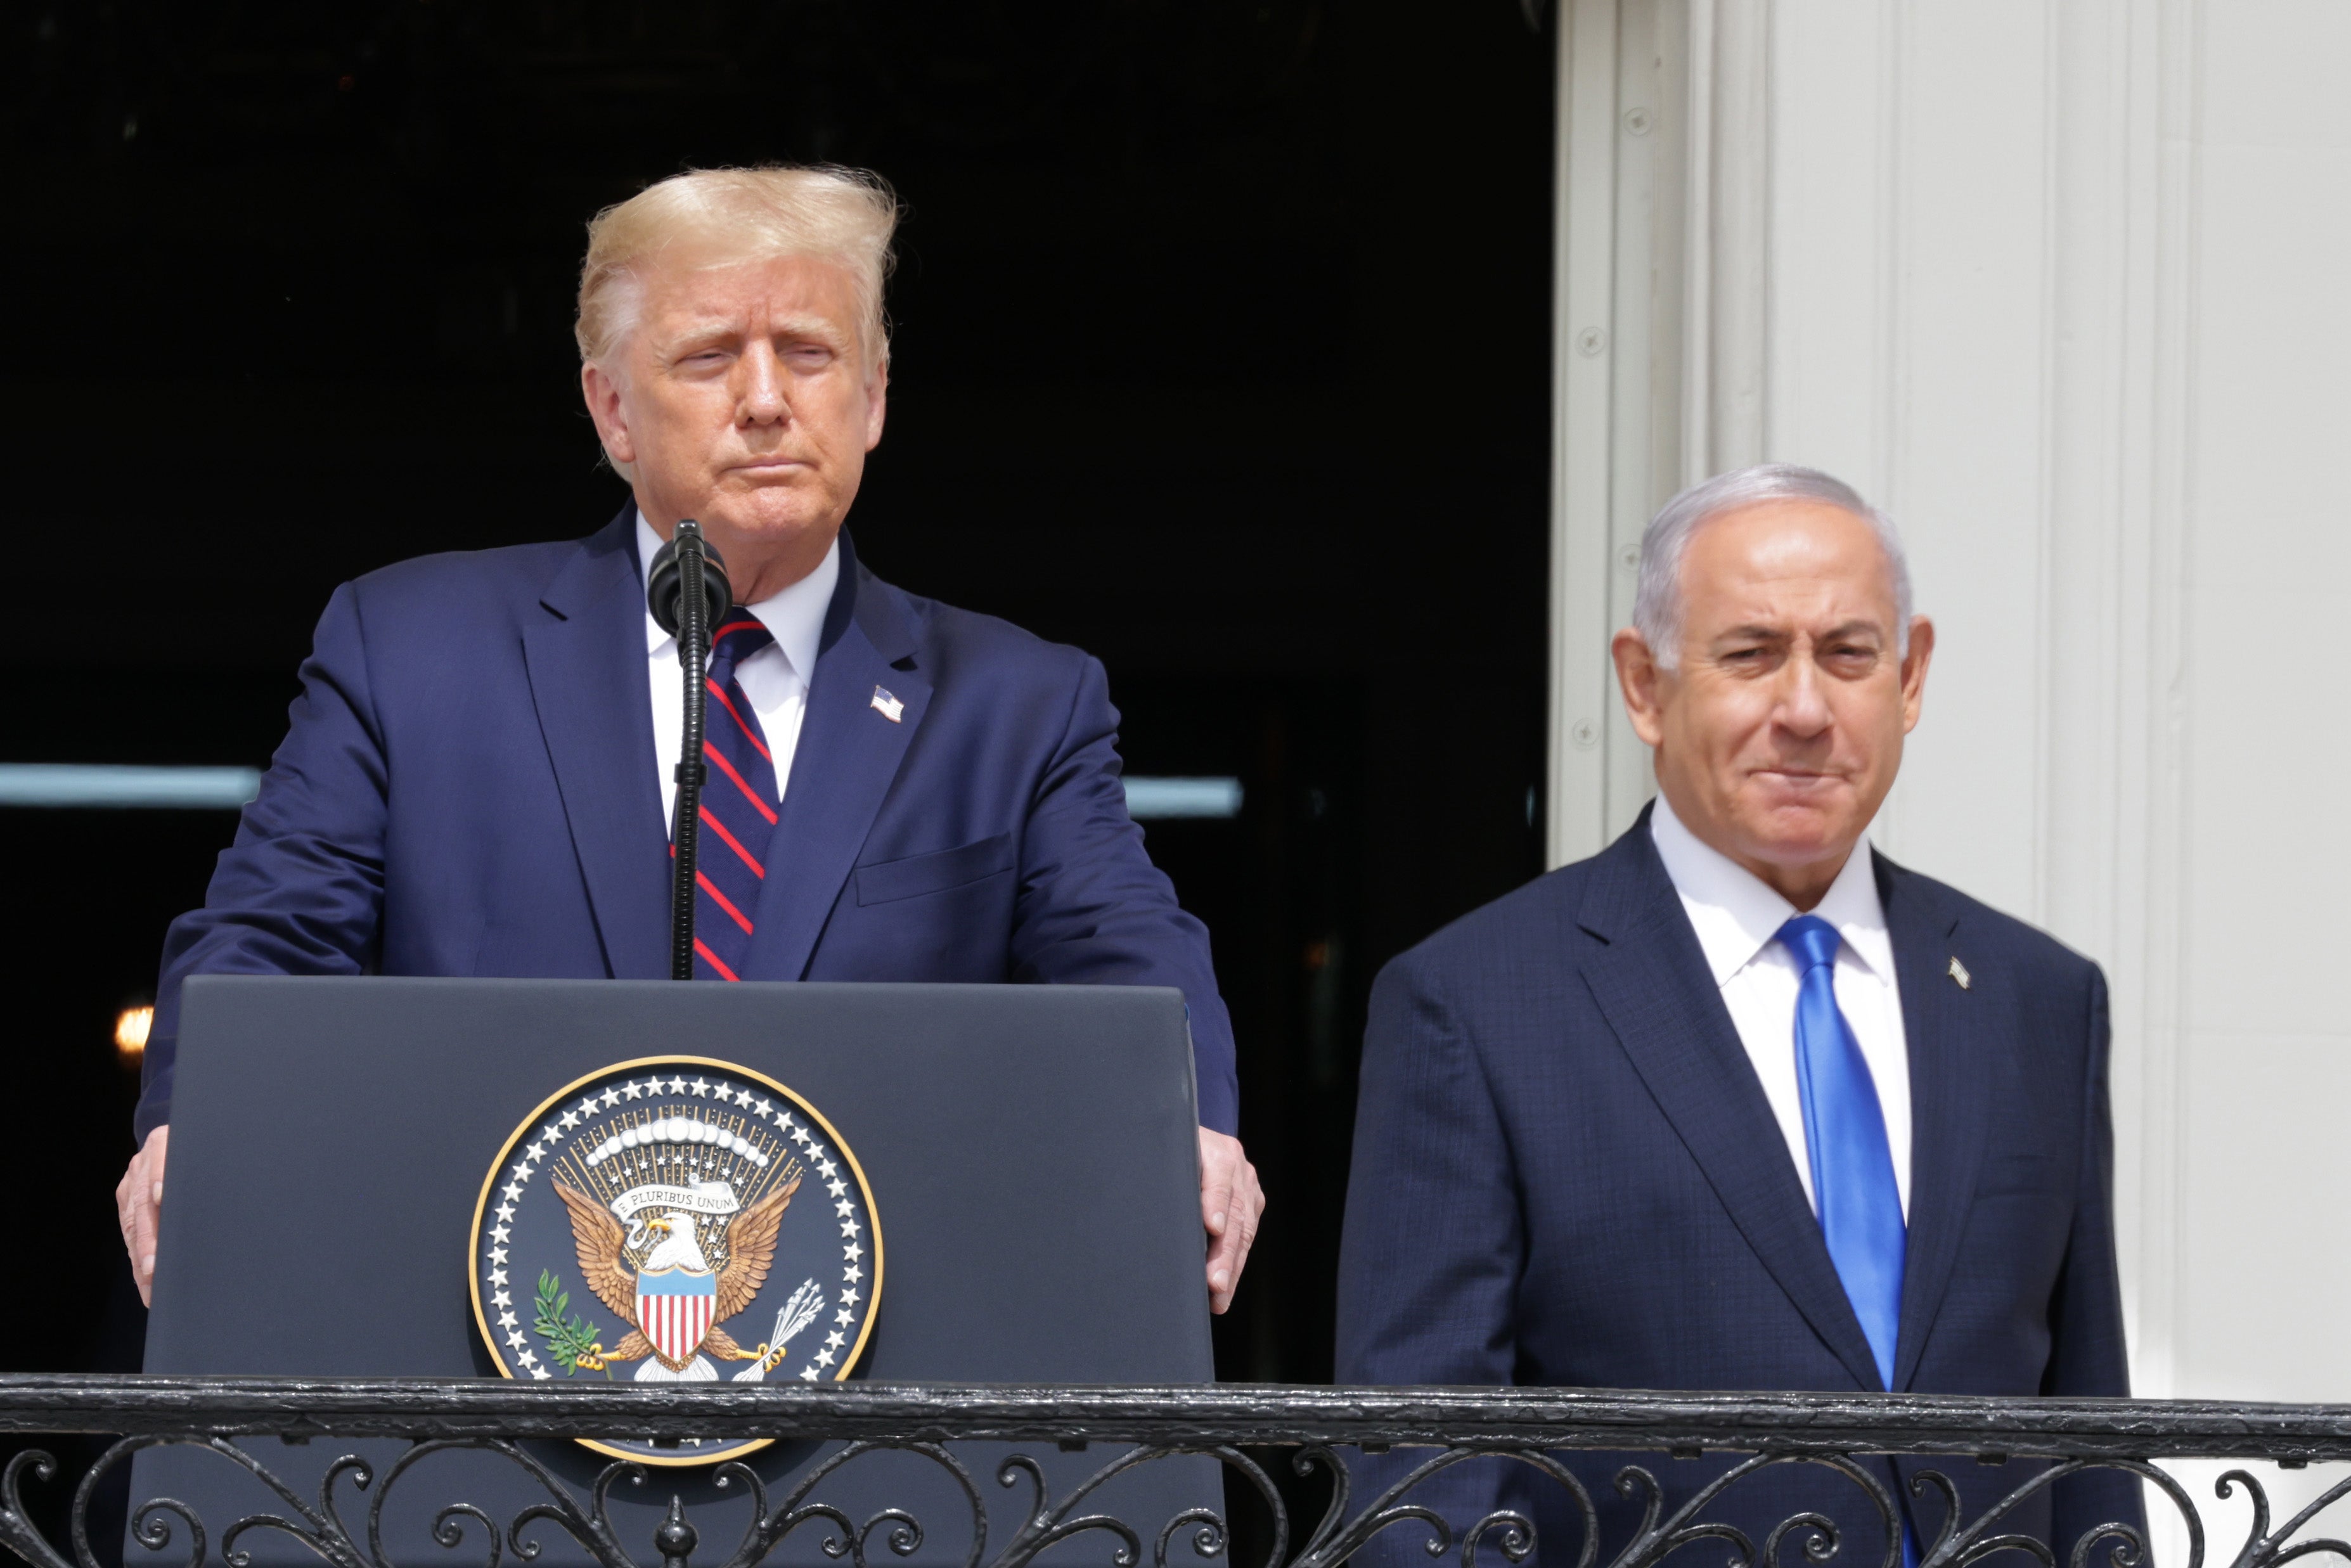 Donald Trump formed a close bond with former Israeli prime minister Binyamin Netanyahu